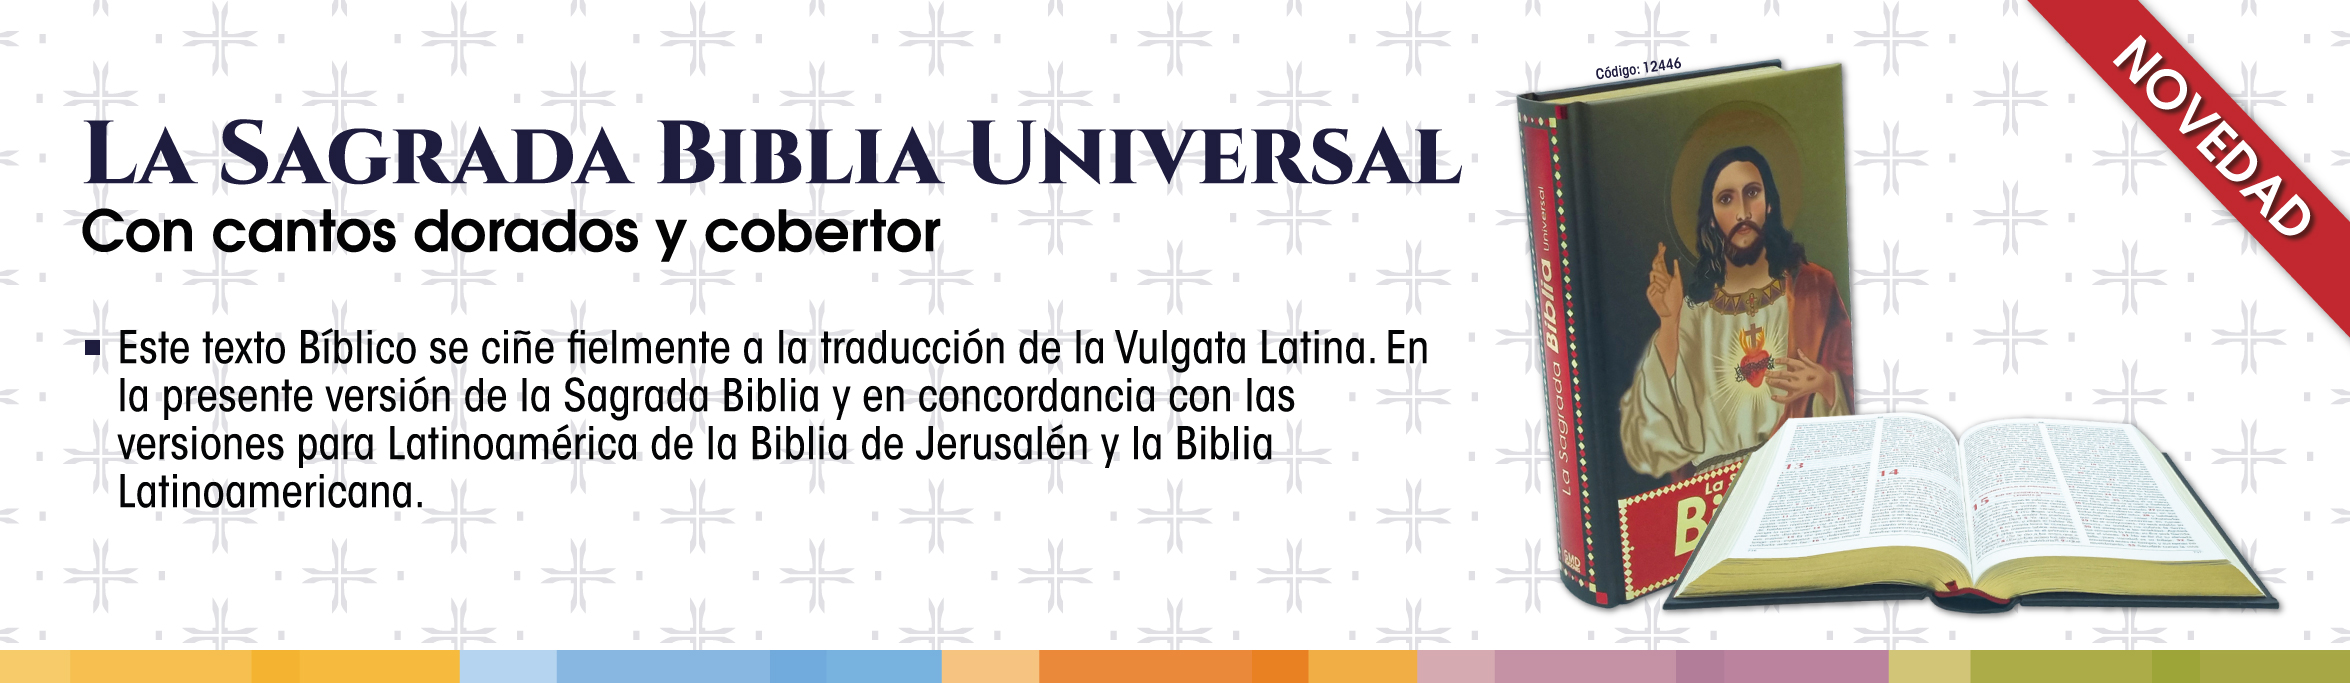 Sagrada-Biblia-Universal.